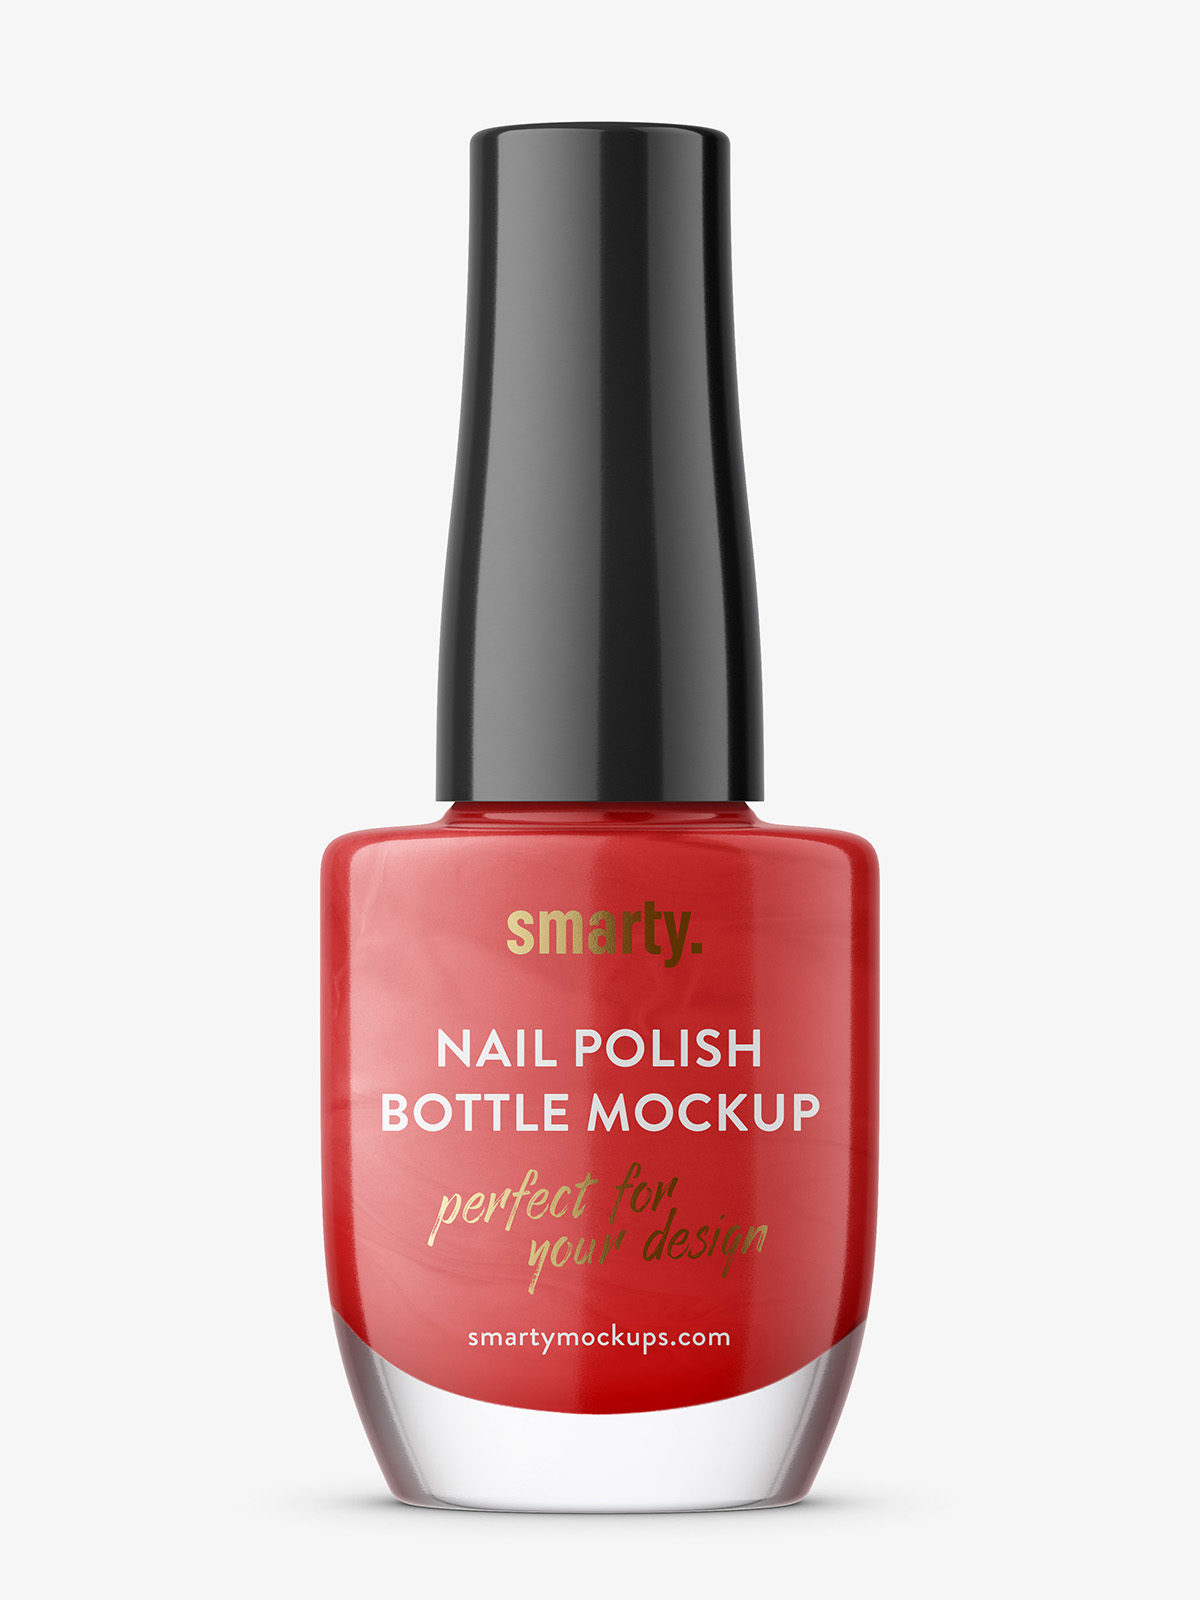 Nail polish bottle mockup - Smarty Mockups